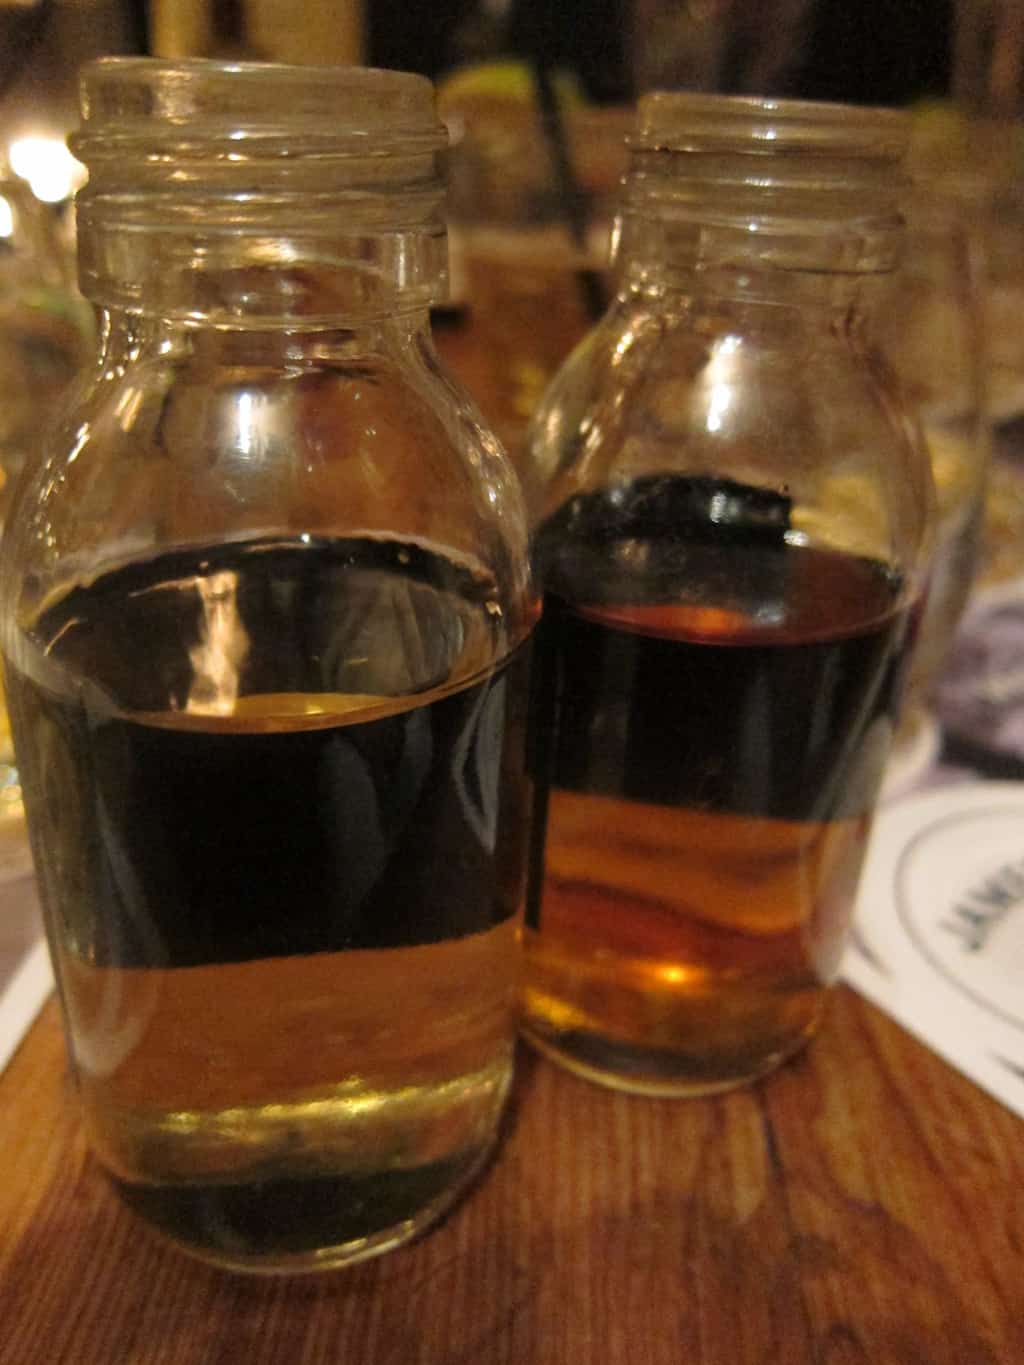 samples of spirit in sherry casks (right) and bourbon barrels (left)